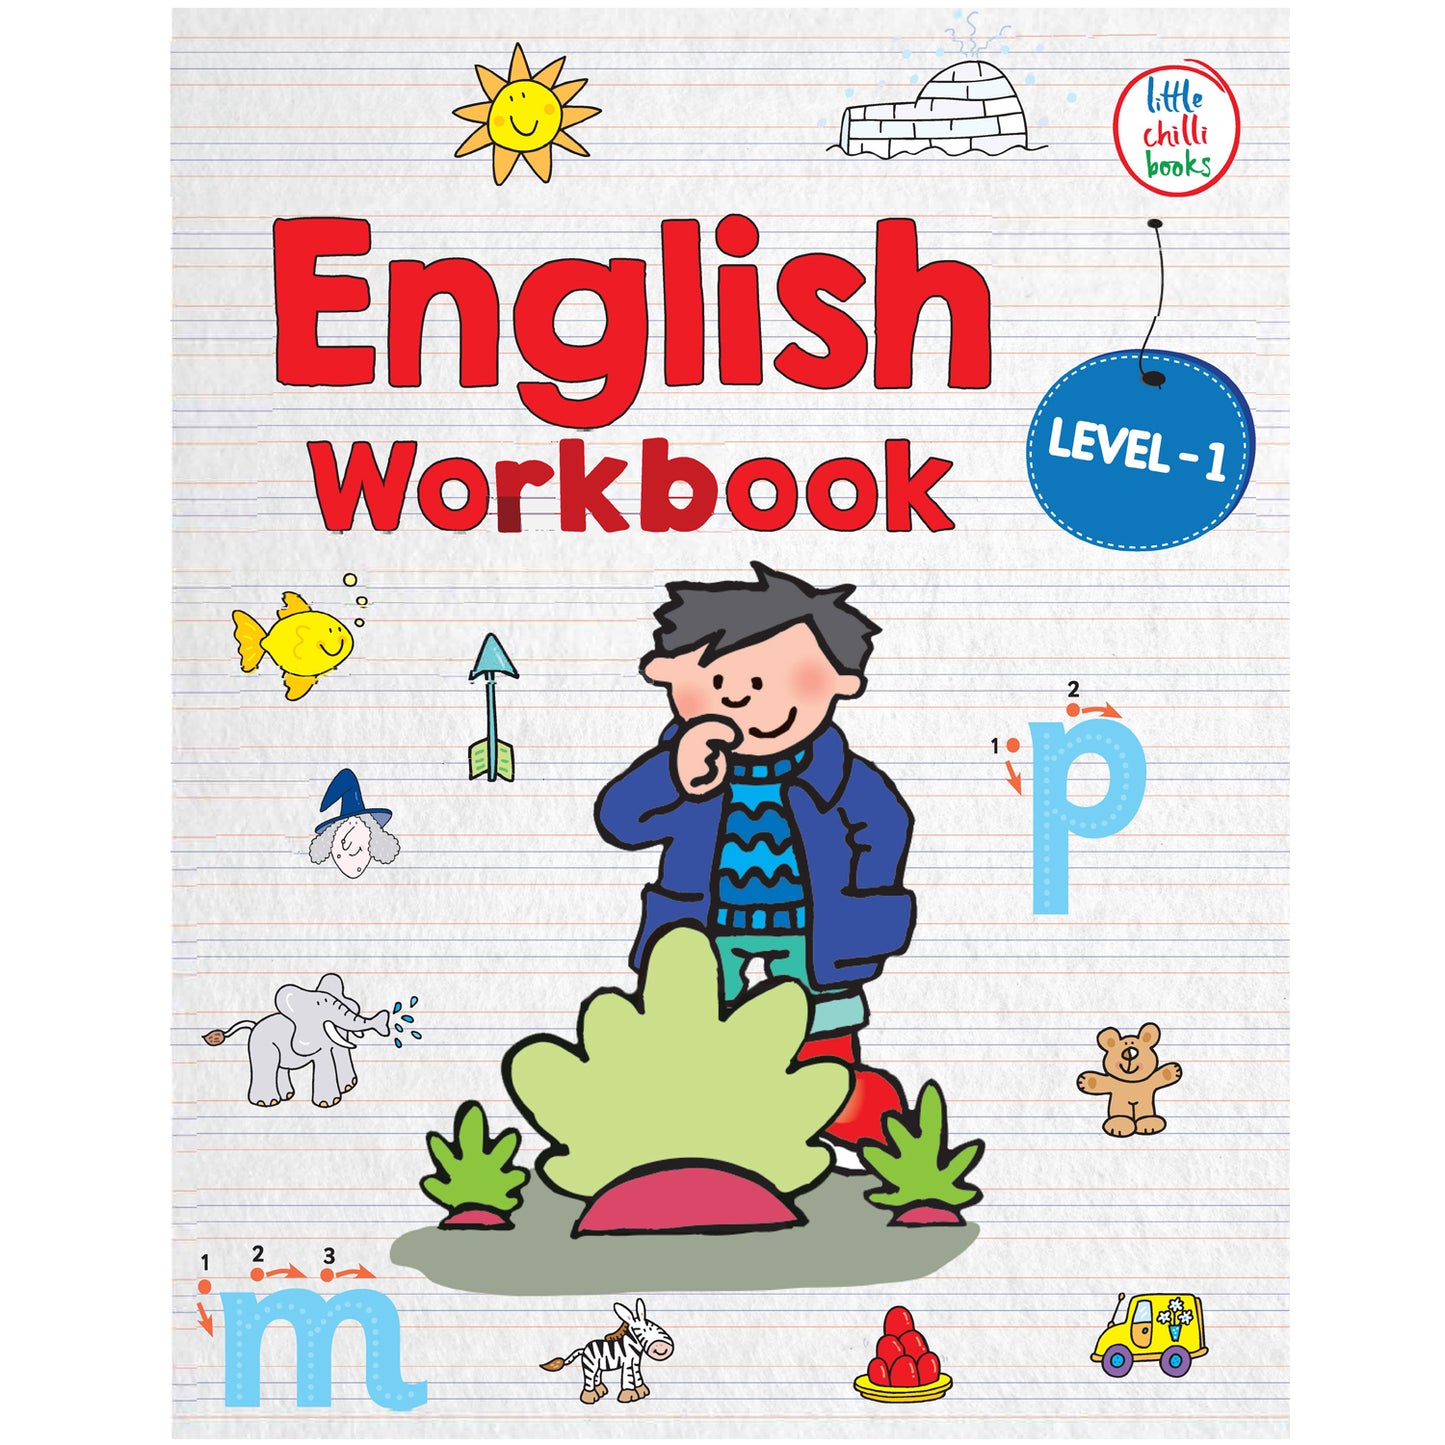 English Workbook LEVEL-1 [Paperback] Parragon